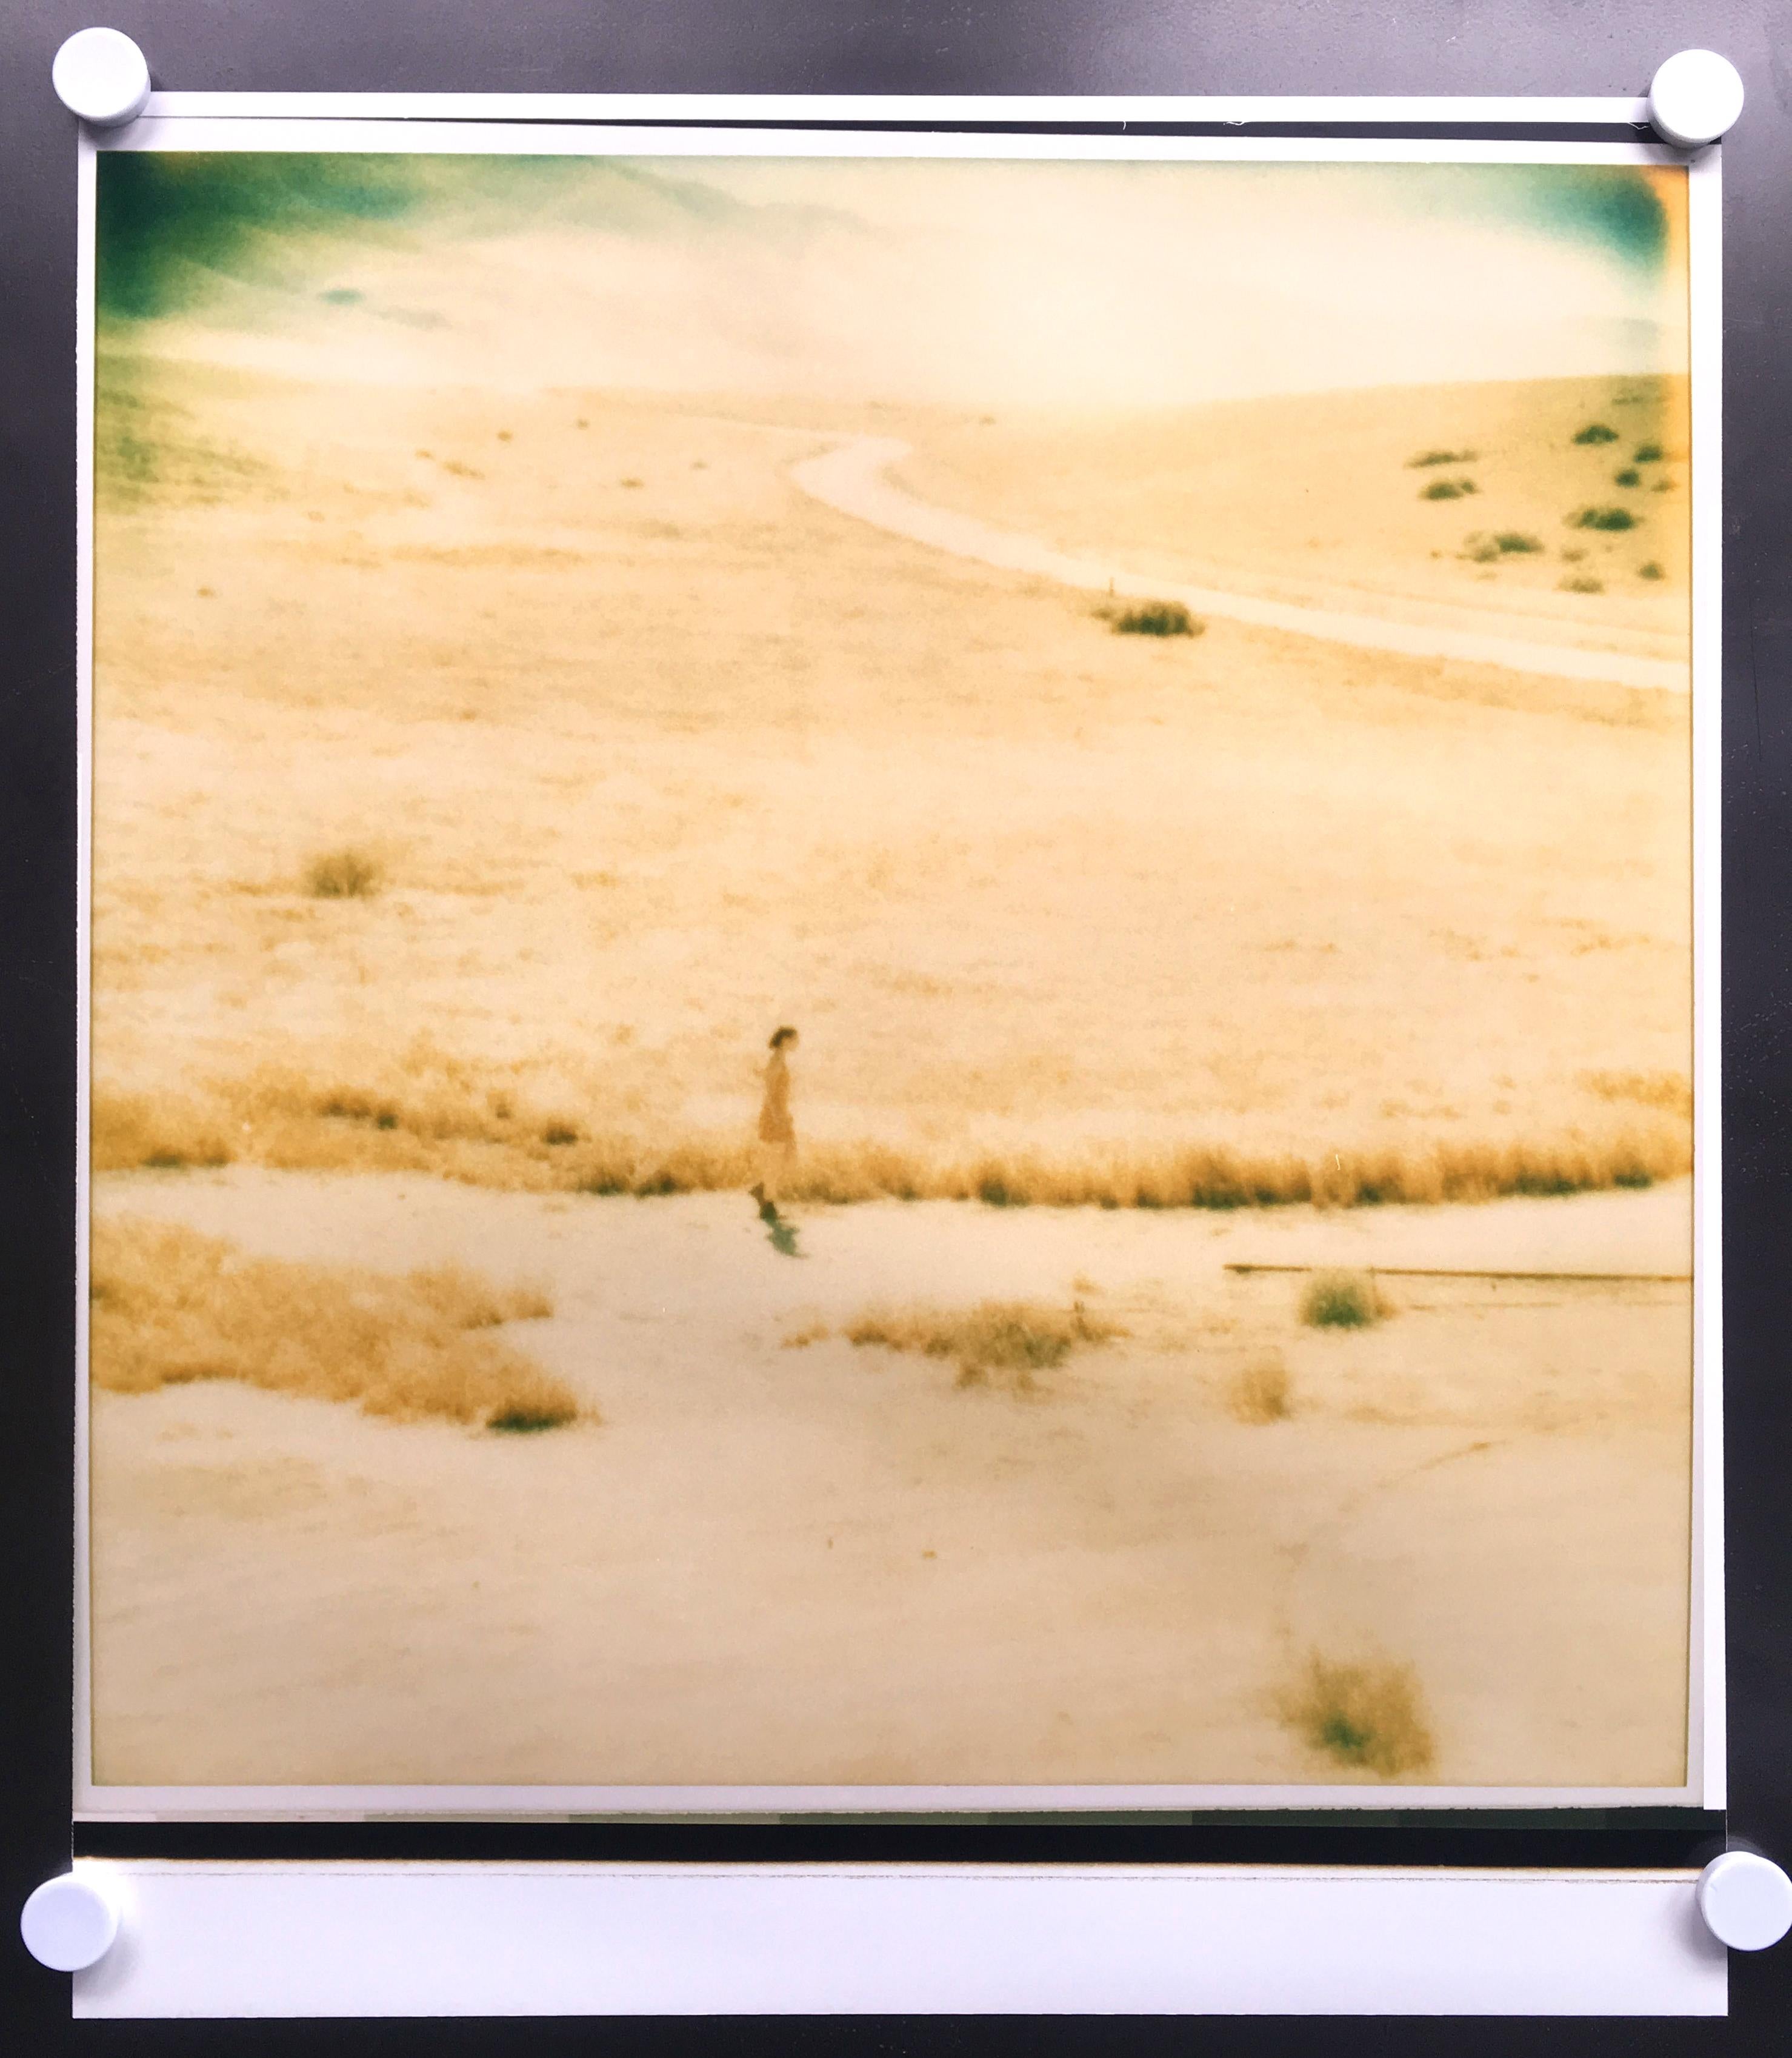 Stefanie Schneider Landscape Photograph - Untitled - Oilfields / Contemporary, Polaroid, Photograph, Analog, Enlargement